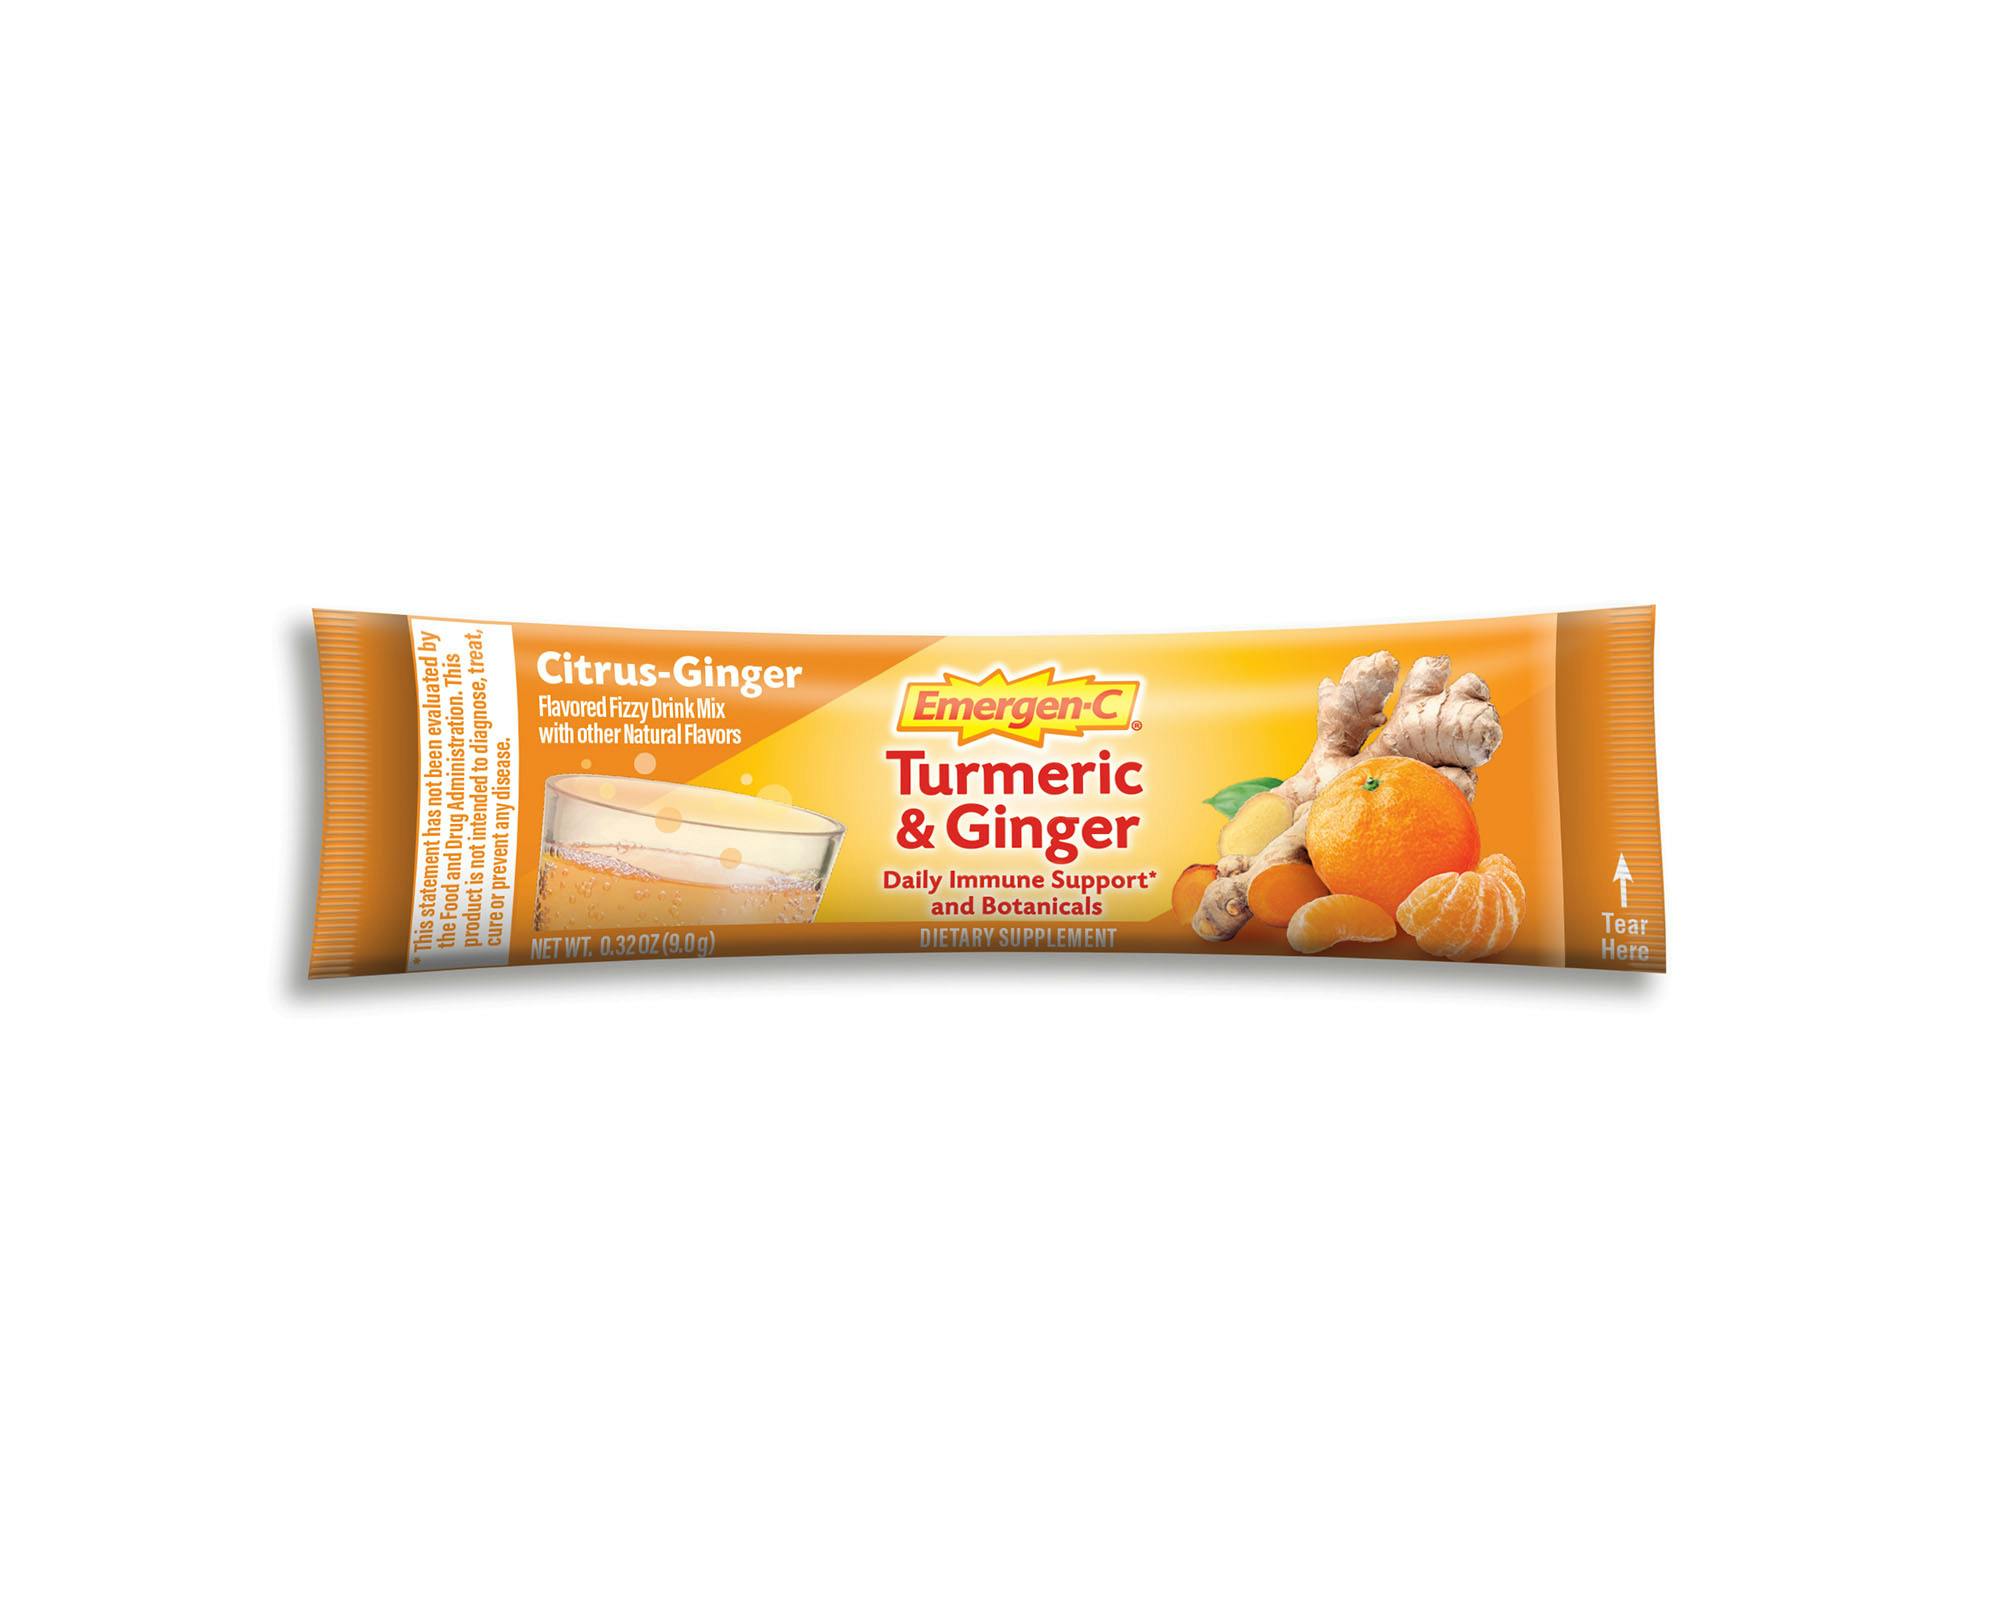 Turmeric & Ginger Botanicals Immune Support packet